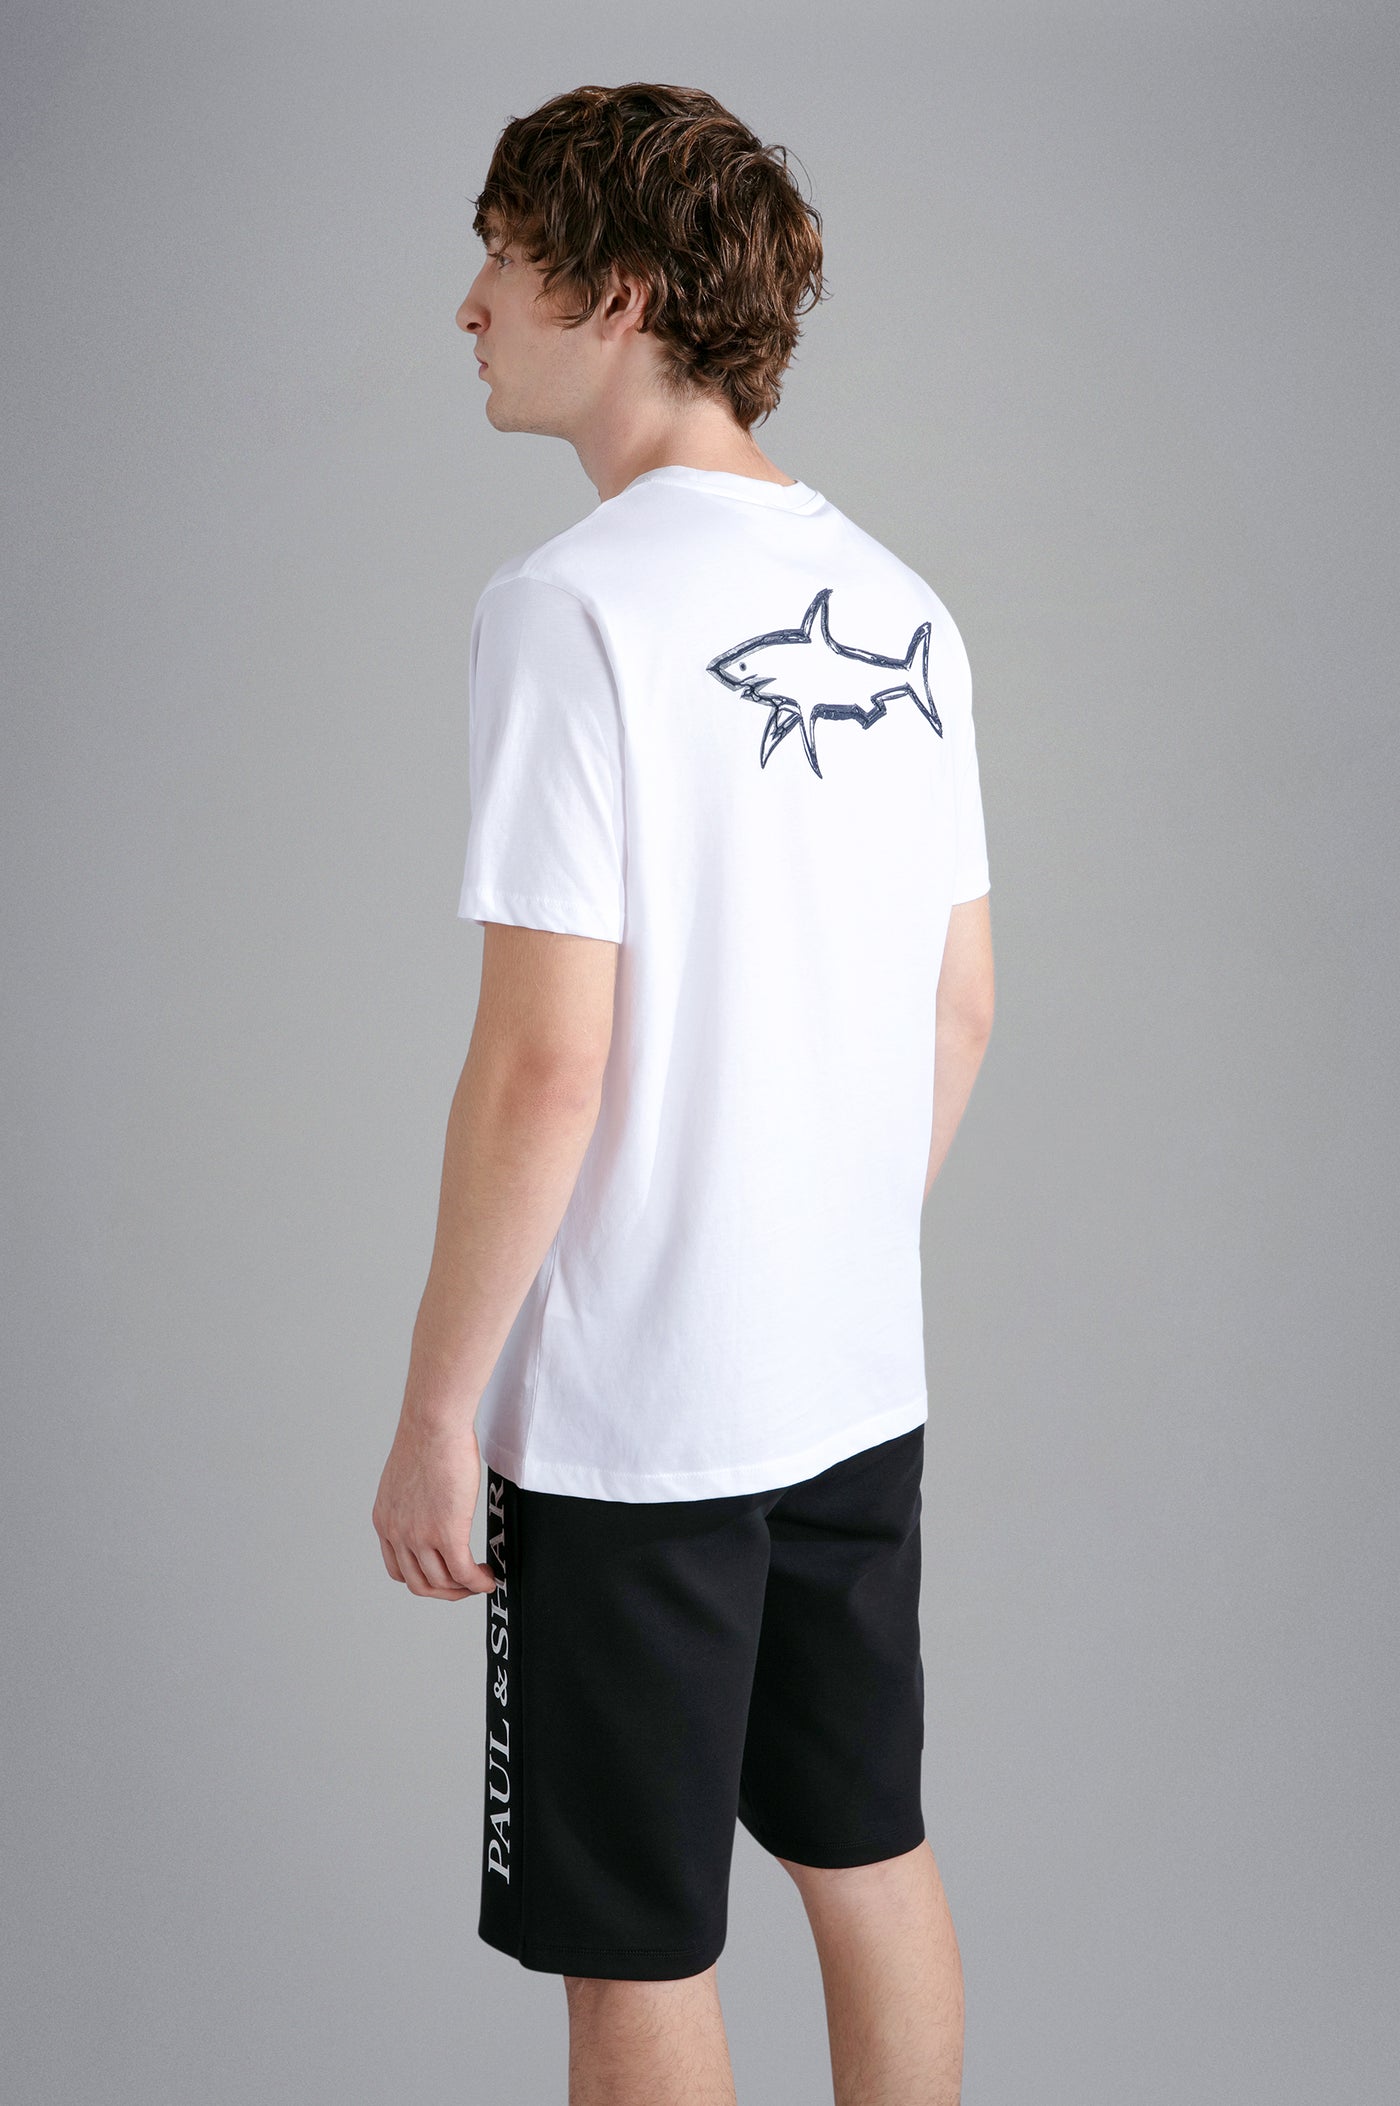 Paul & Shark Organic Cotton T-Shirt with Shark Print and P&S Badge | White